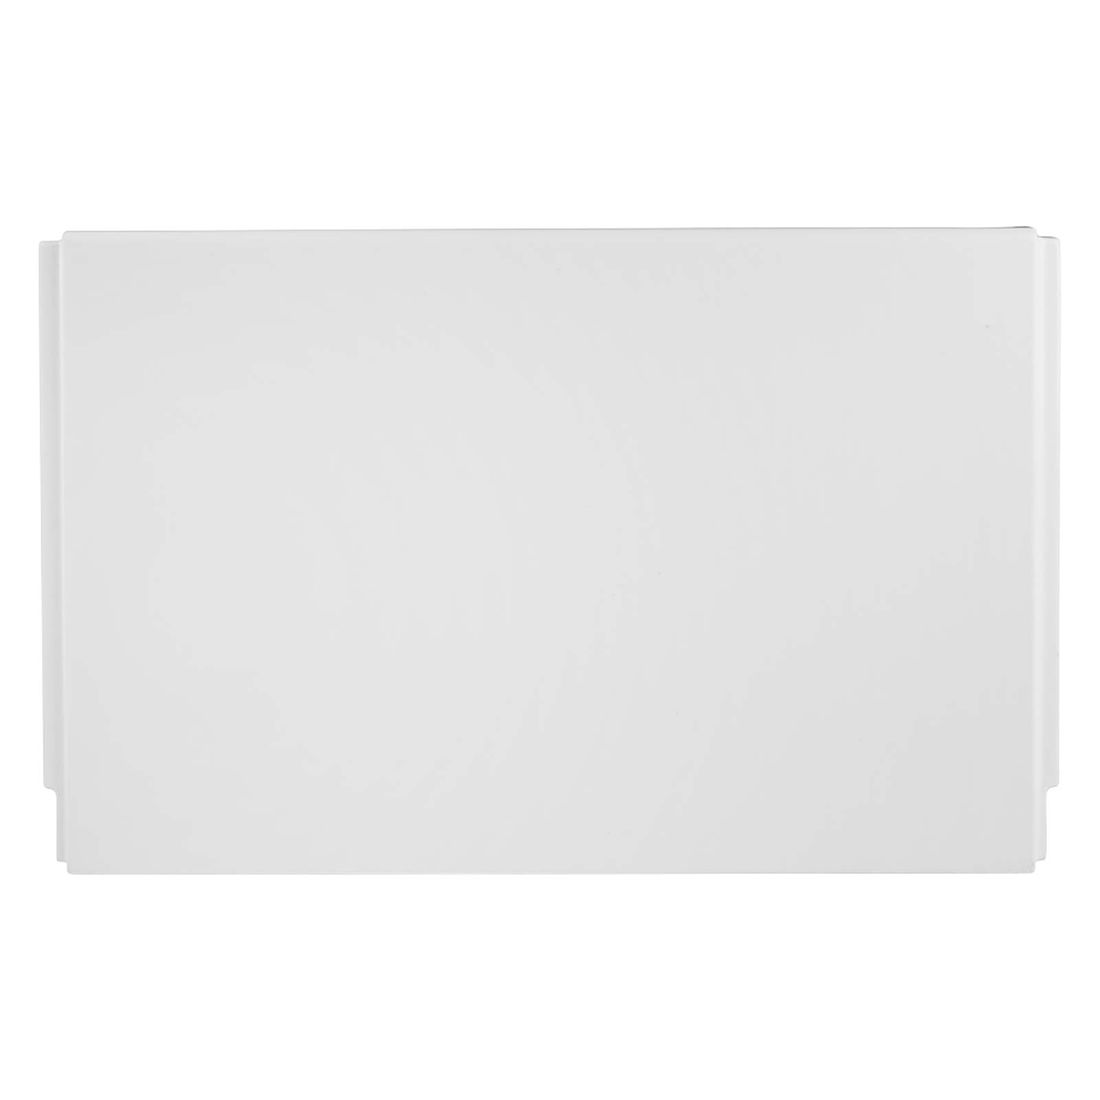 Reinforced Acrylic Bath Panel End White 800 X 520Mm